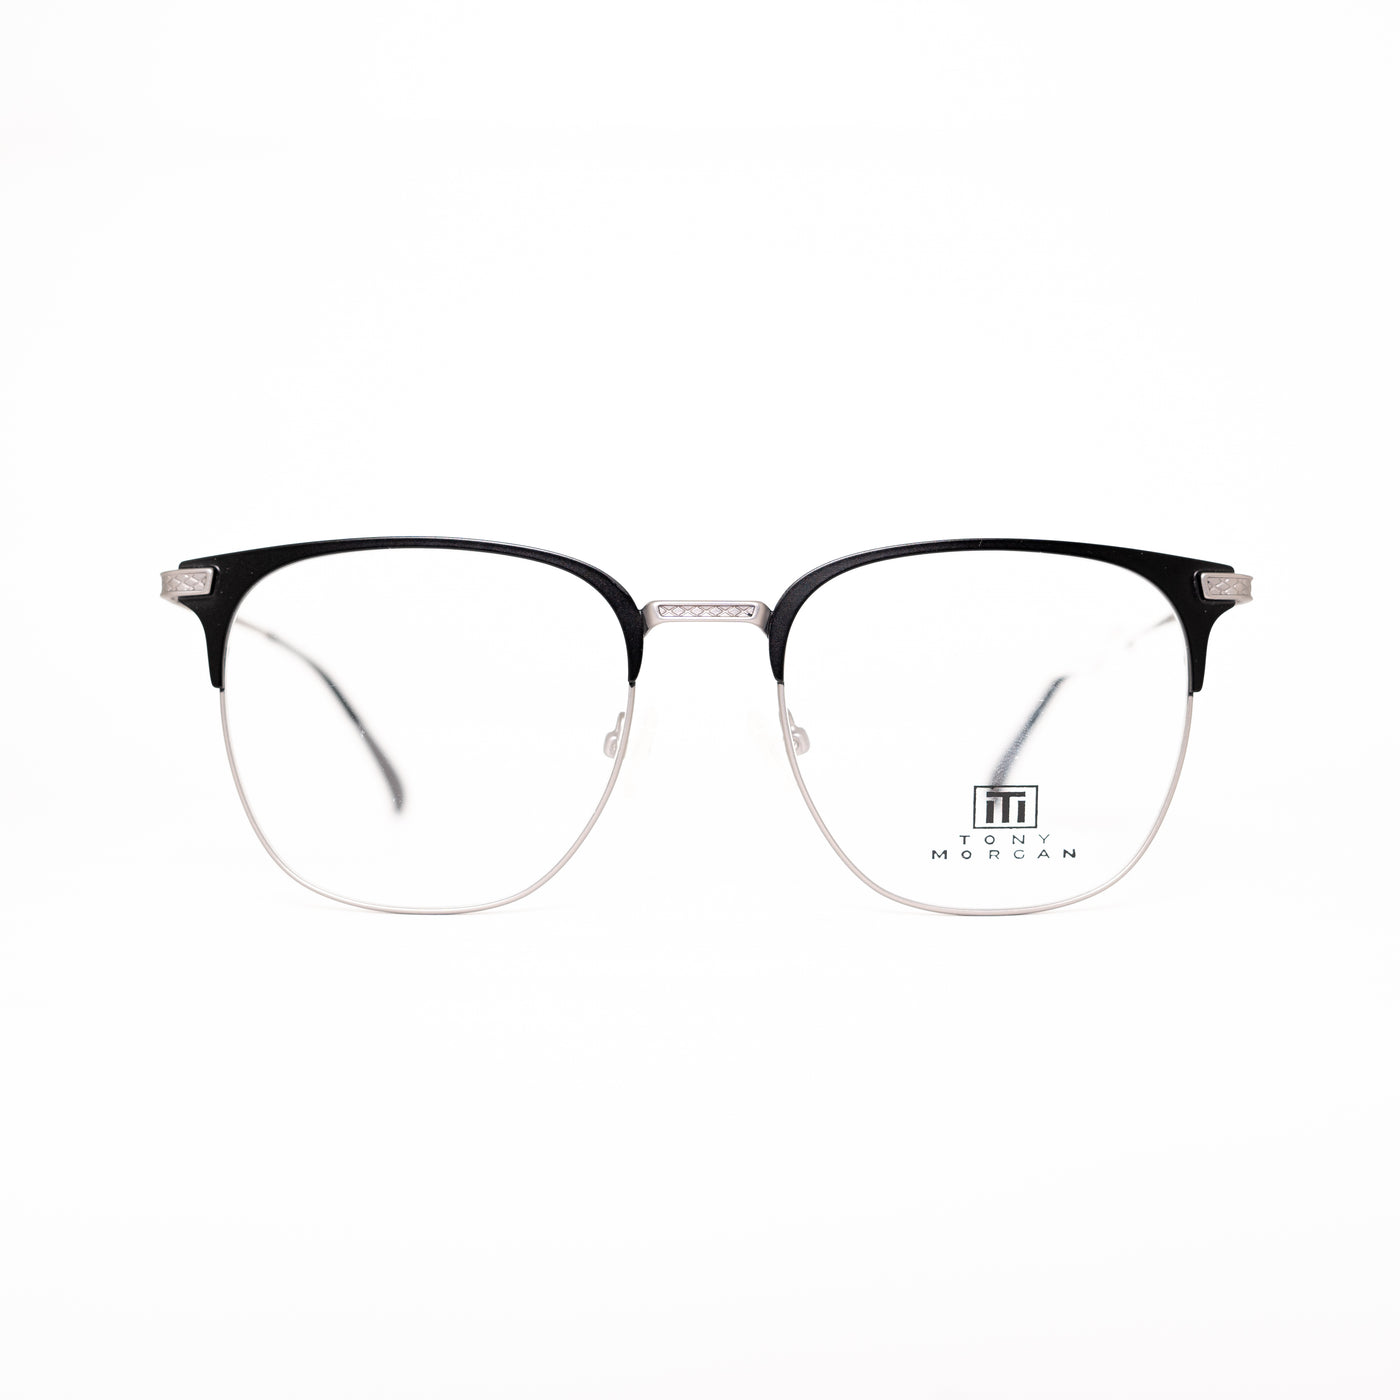 Tony Morgan London TM YC-23007/C4 | Eyeglasses - Vision Express Optical Philippines